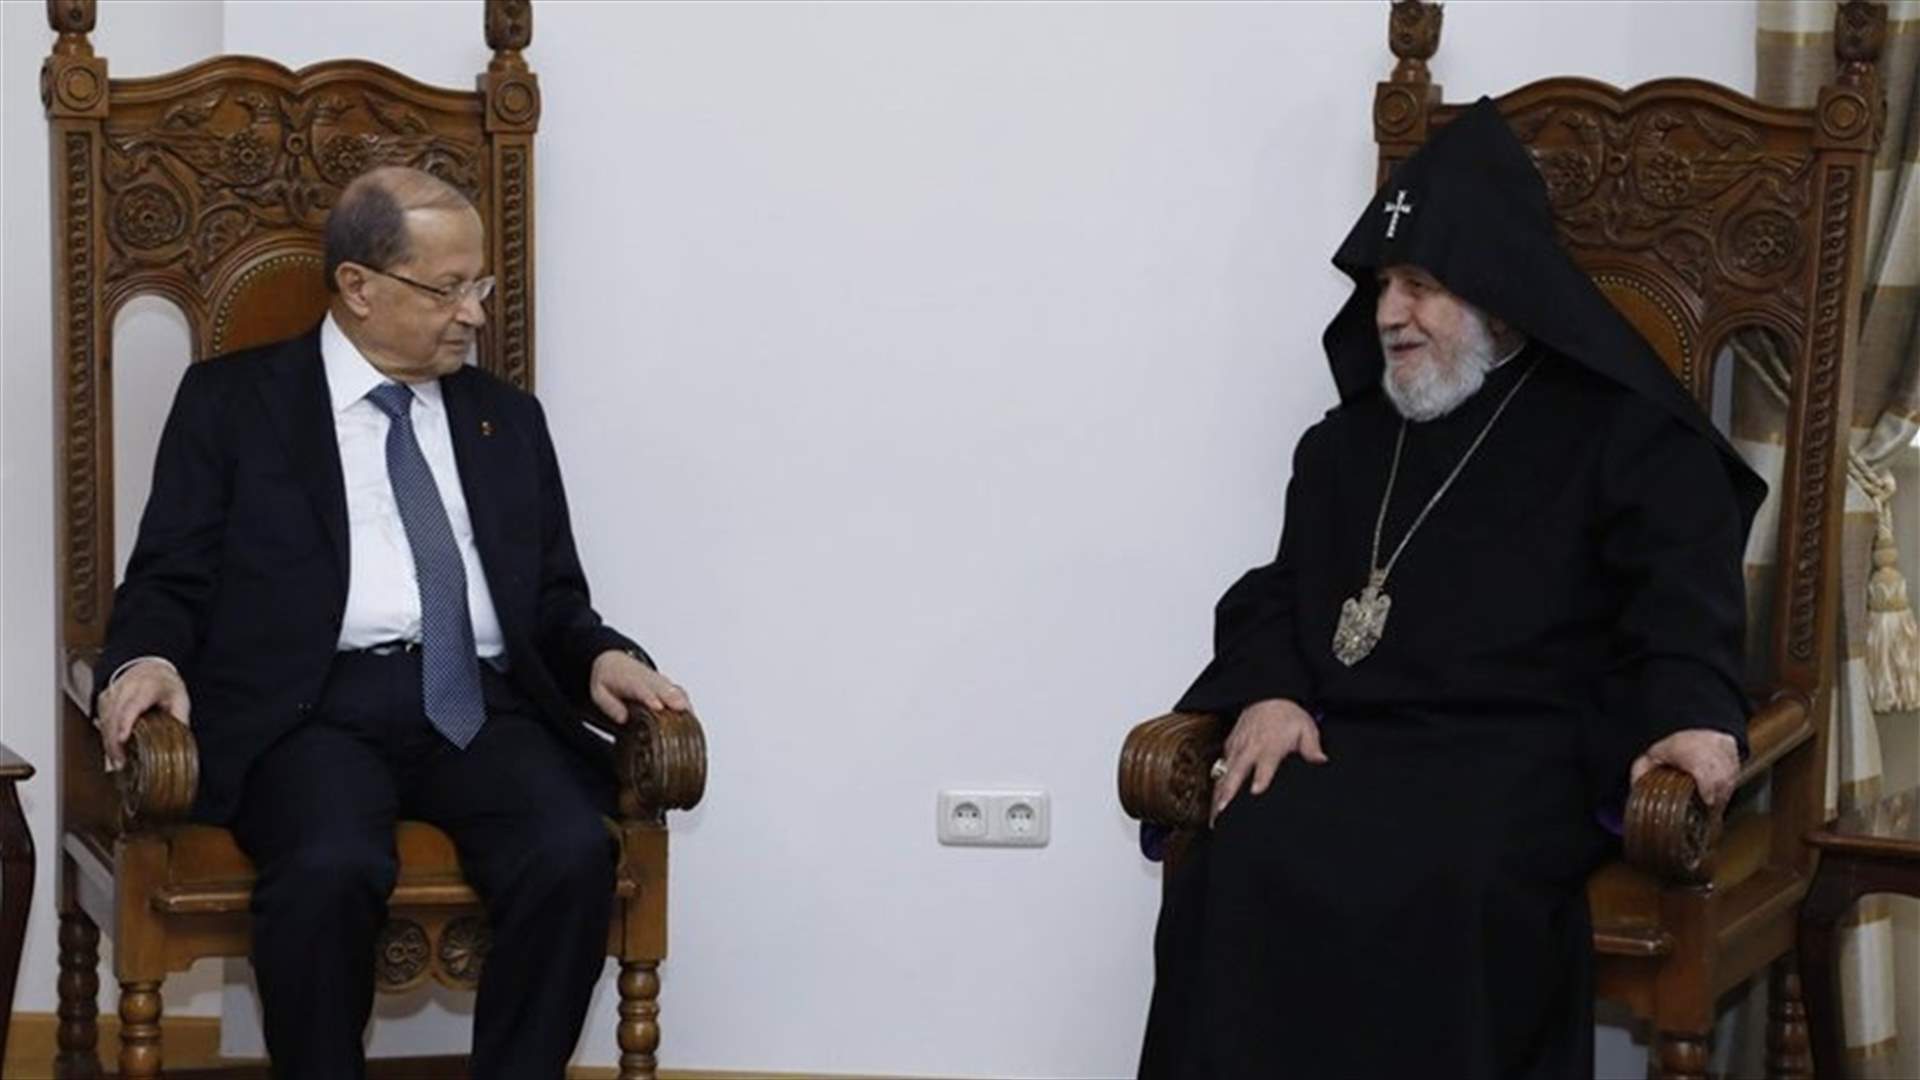 President Aoun from Armenia: This visit aims at boosting bilateral ties